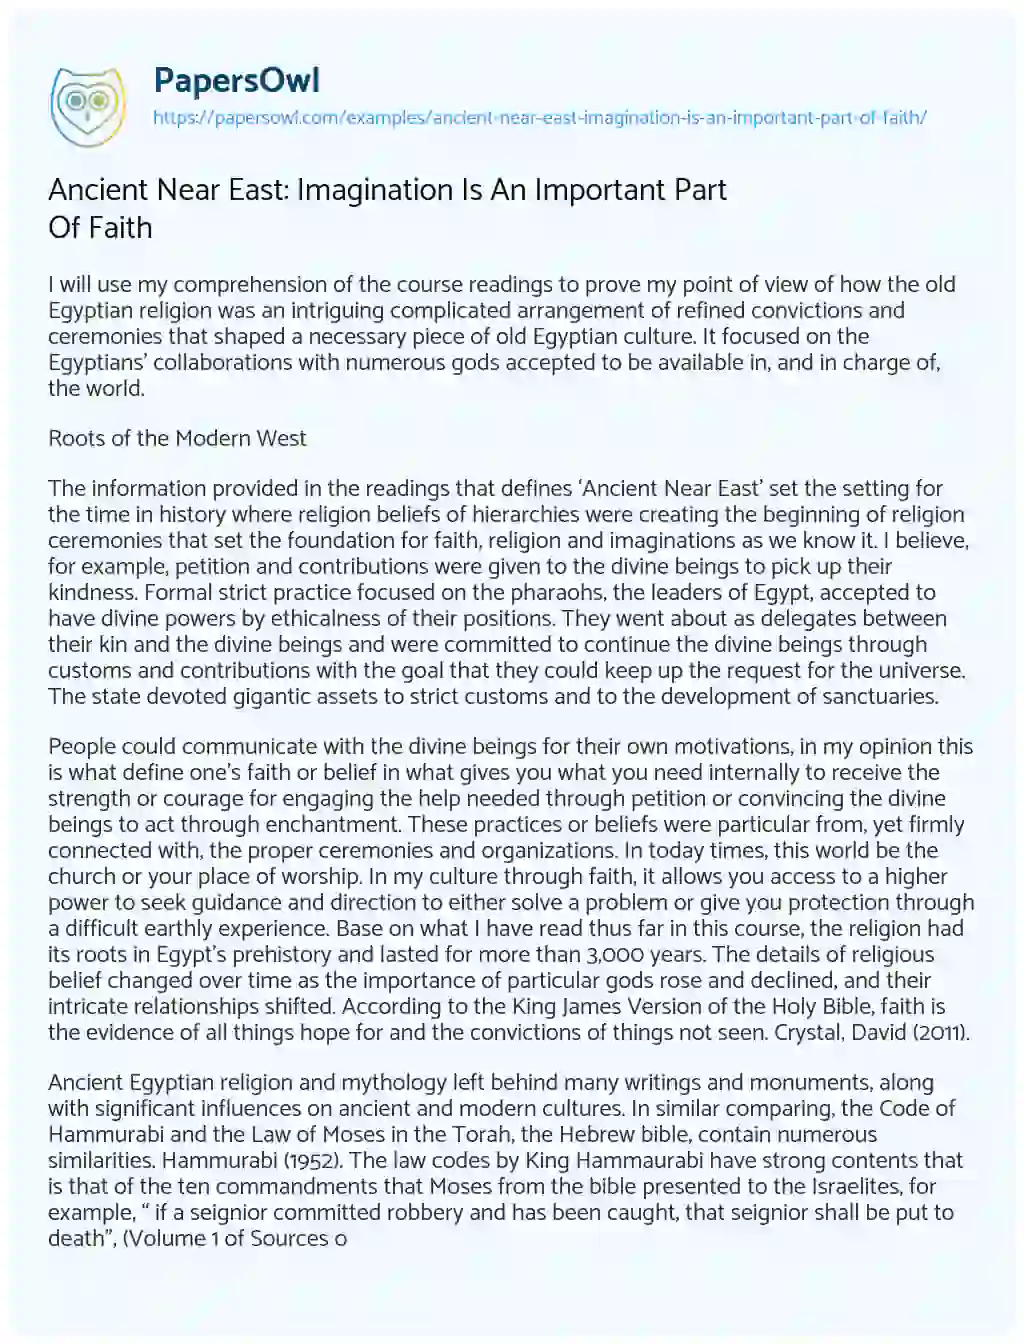 Essay on Ancient Near East: Imagination is an Important Part of Faith